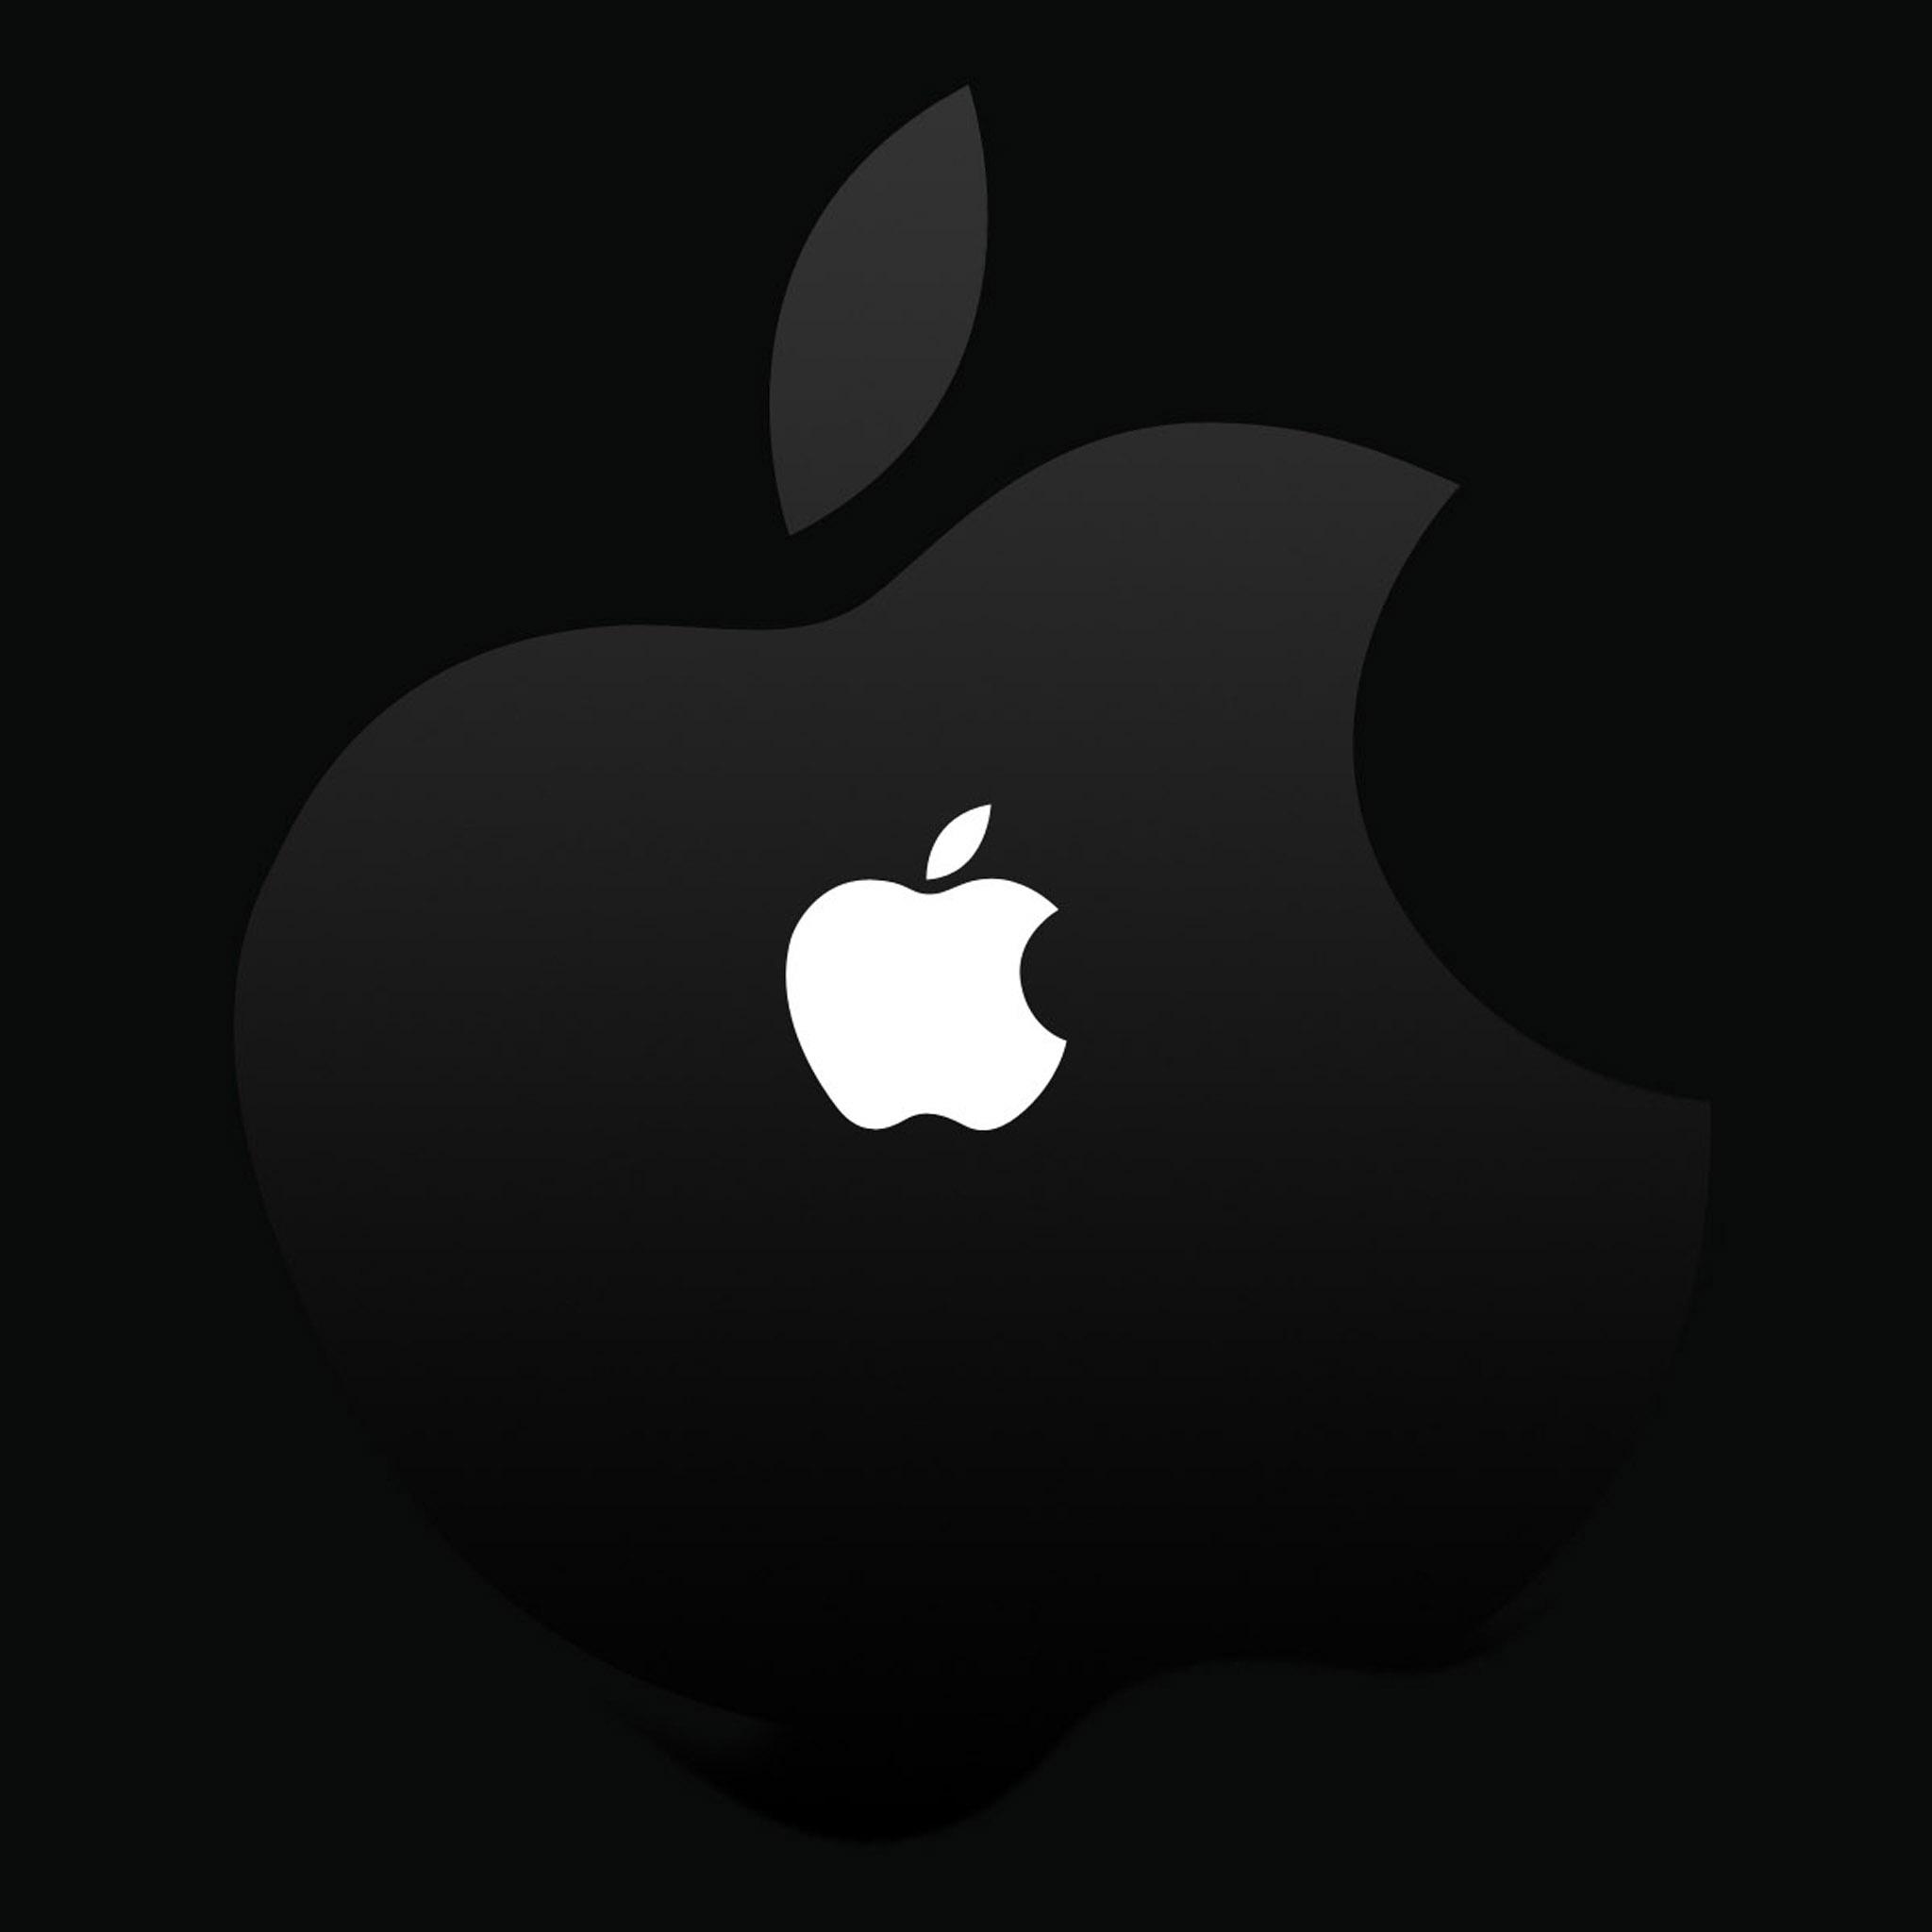 Black Apple logo iPad Air 2 Wallpapers iPad Air 2 Backgrounds